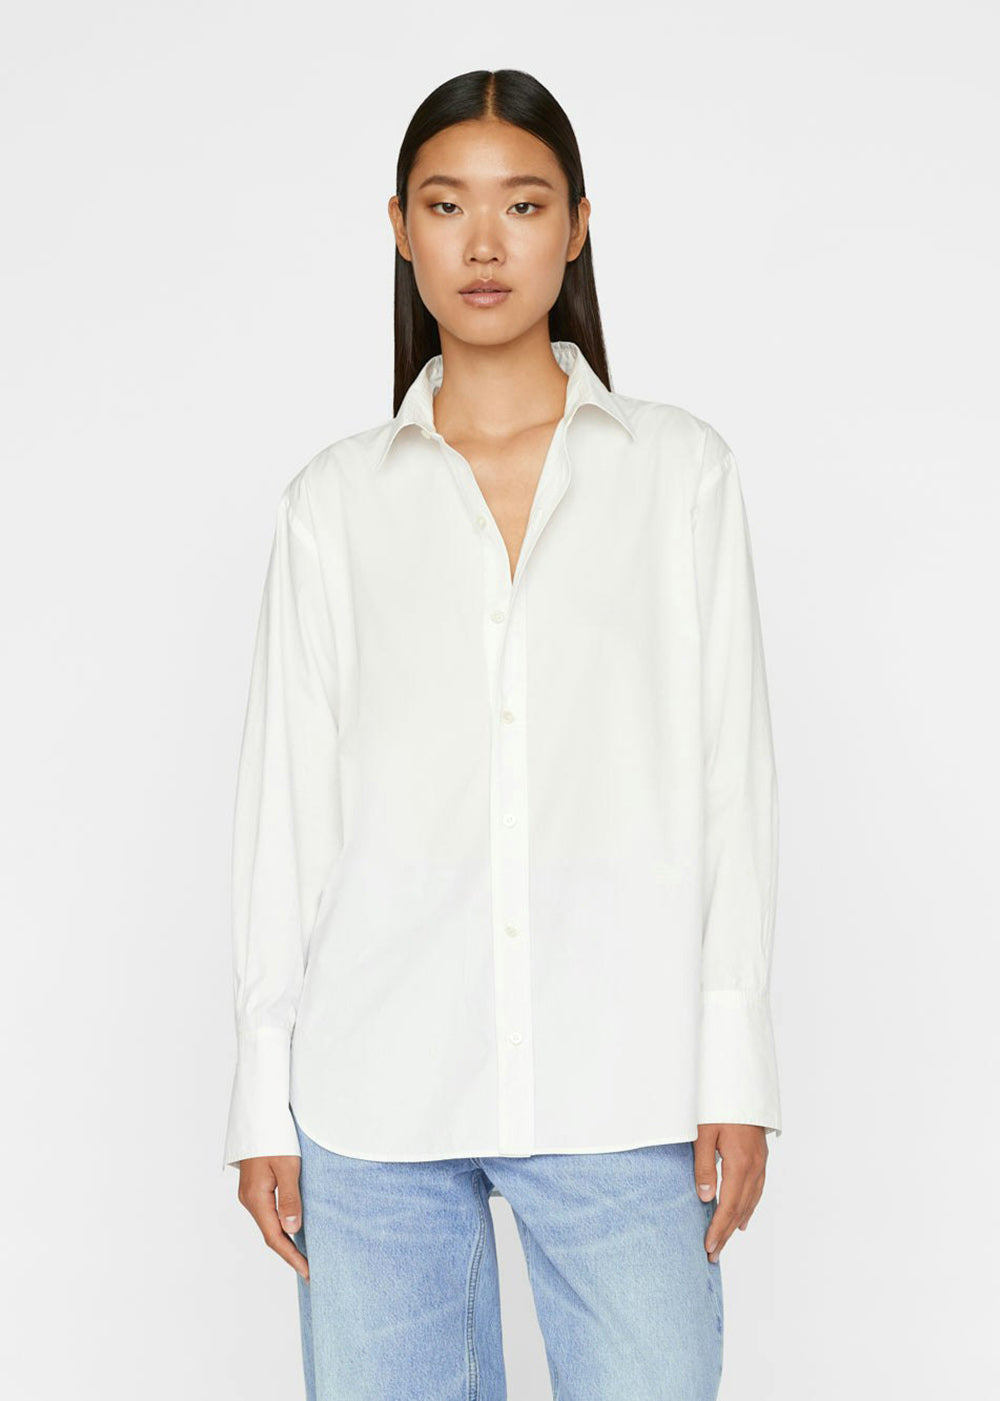 The Oversized Shirt - White - Frame Denim Canada - Danali - LWSH2378-BLAN